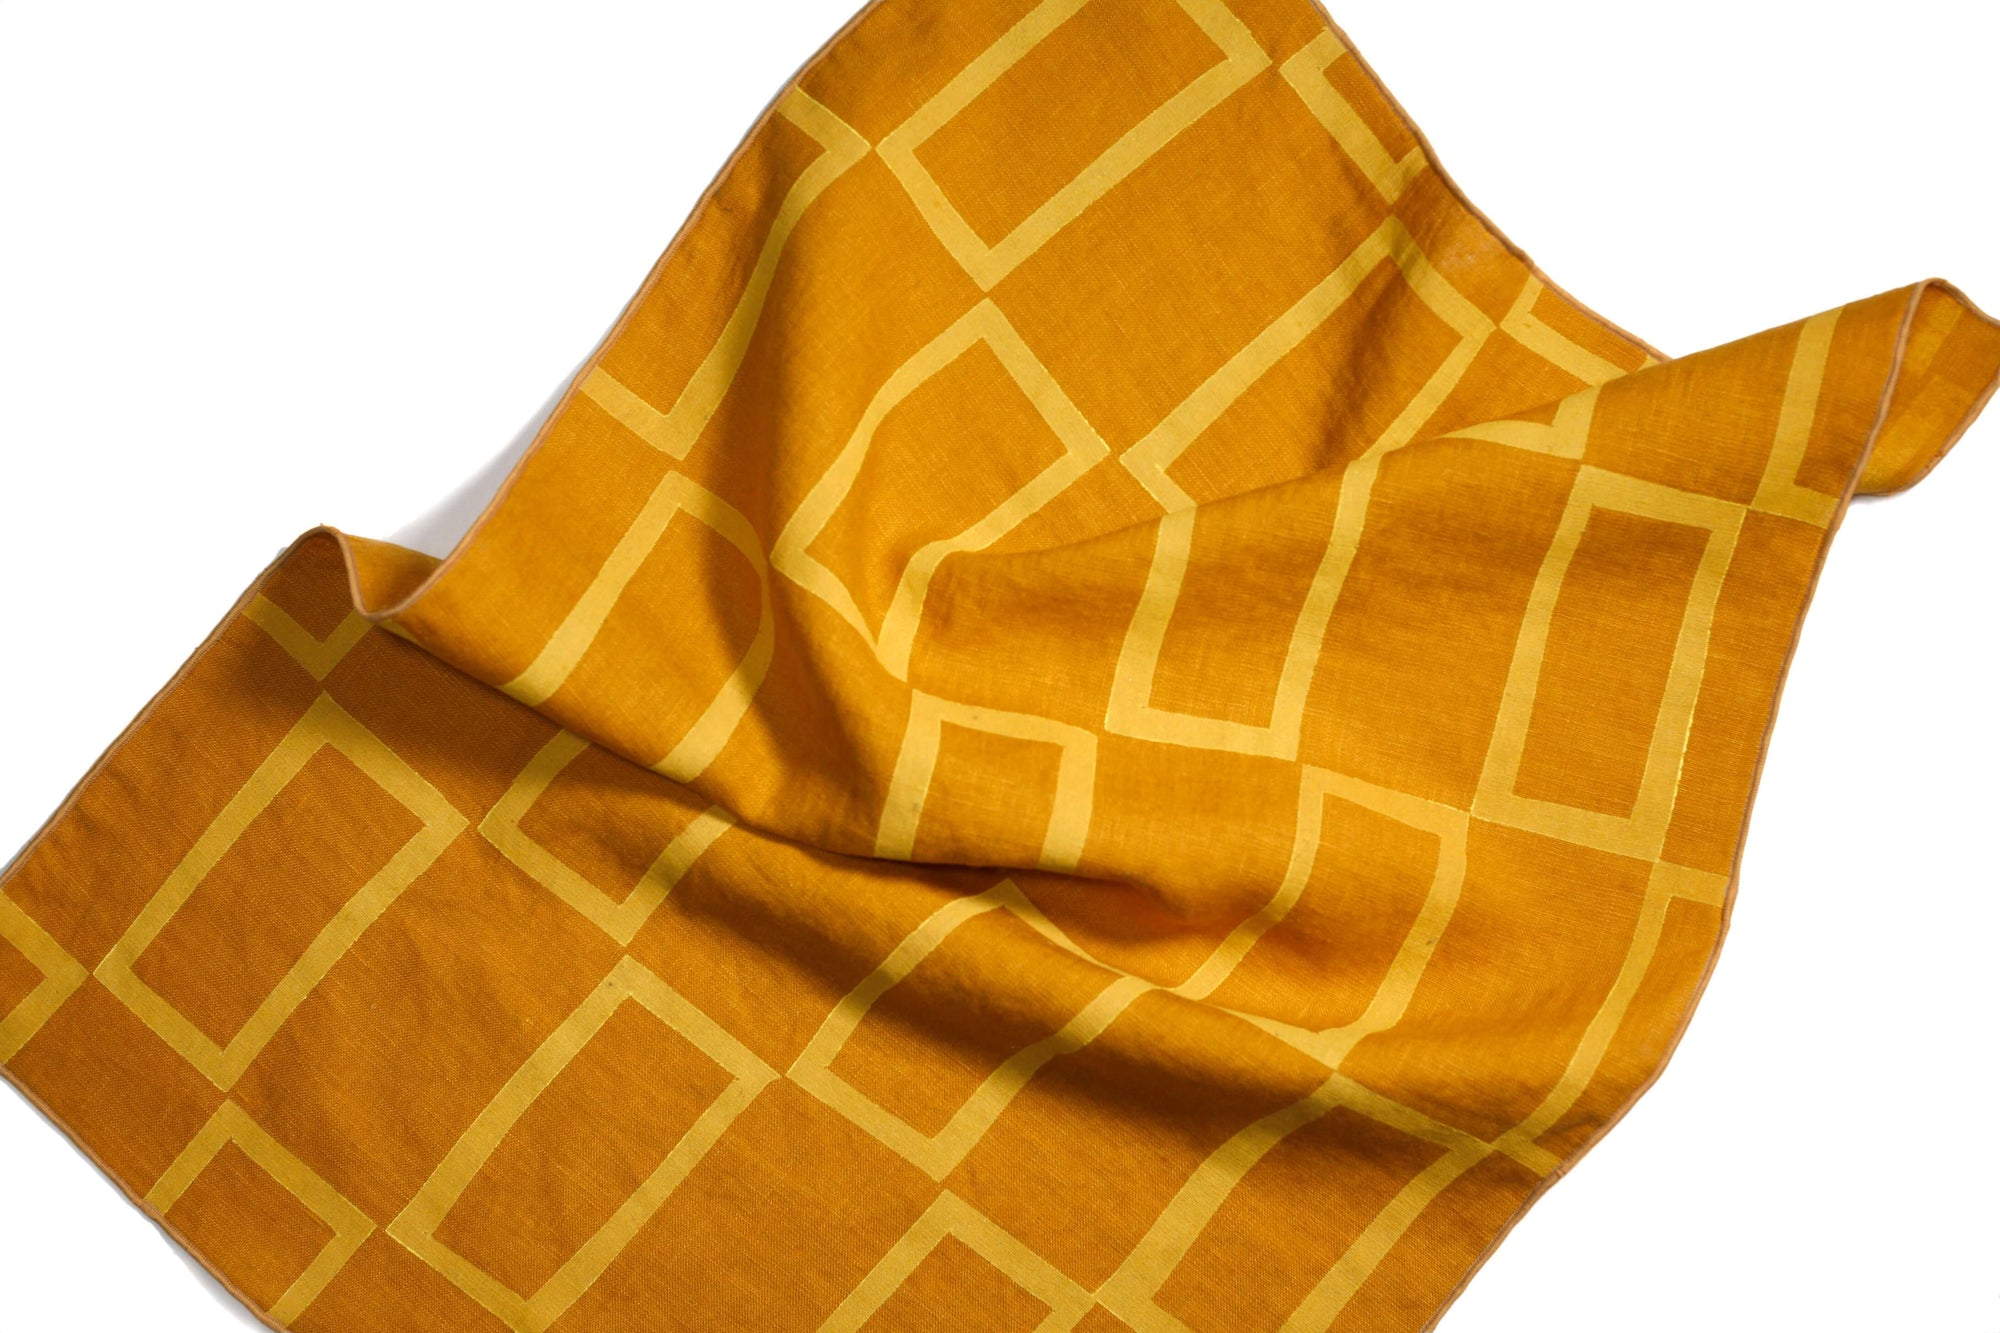 'Windows' Hand-Printed 100% Linen Tea Towel in Sunshine colorway